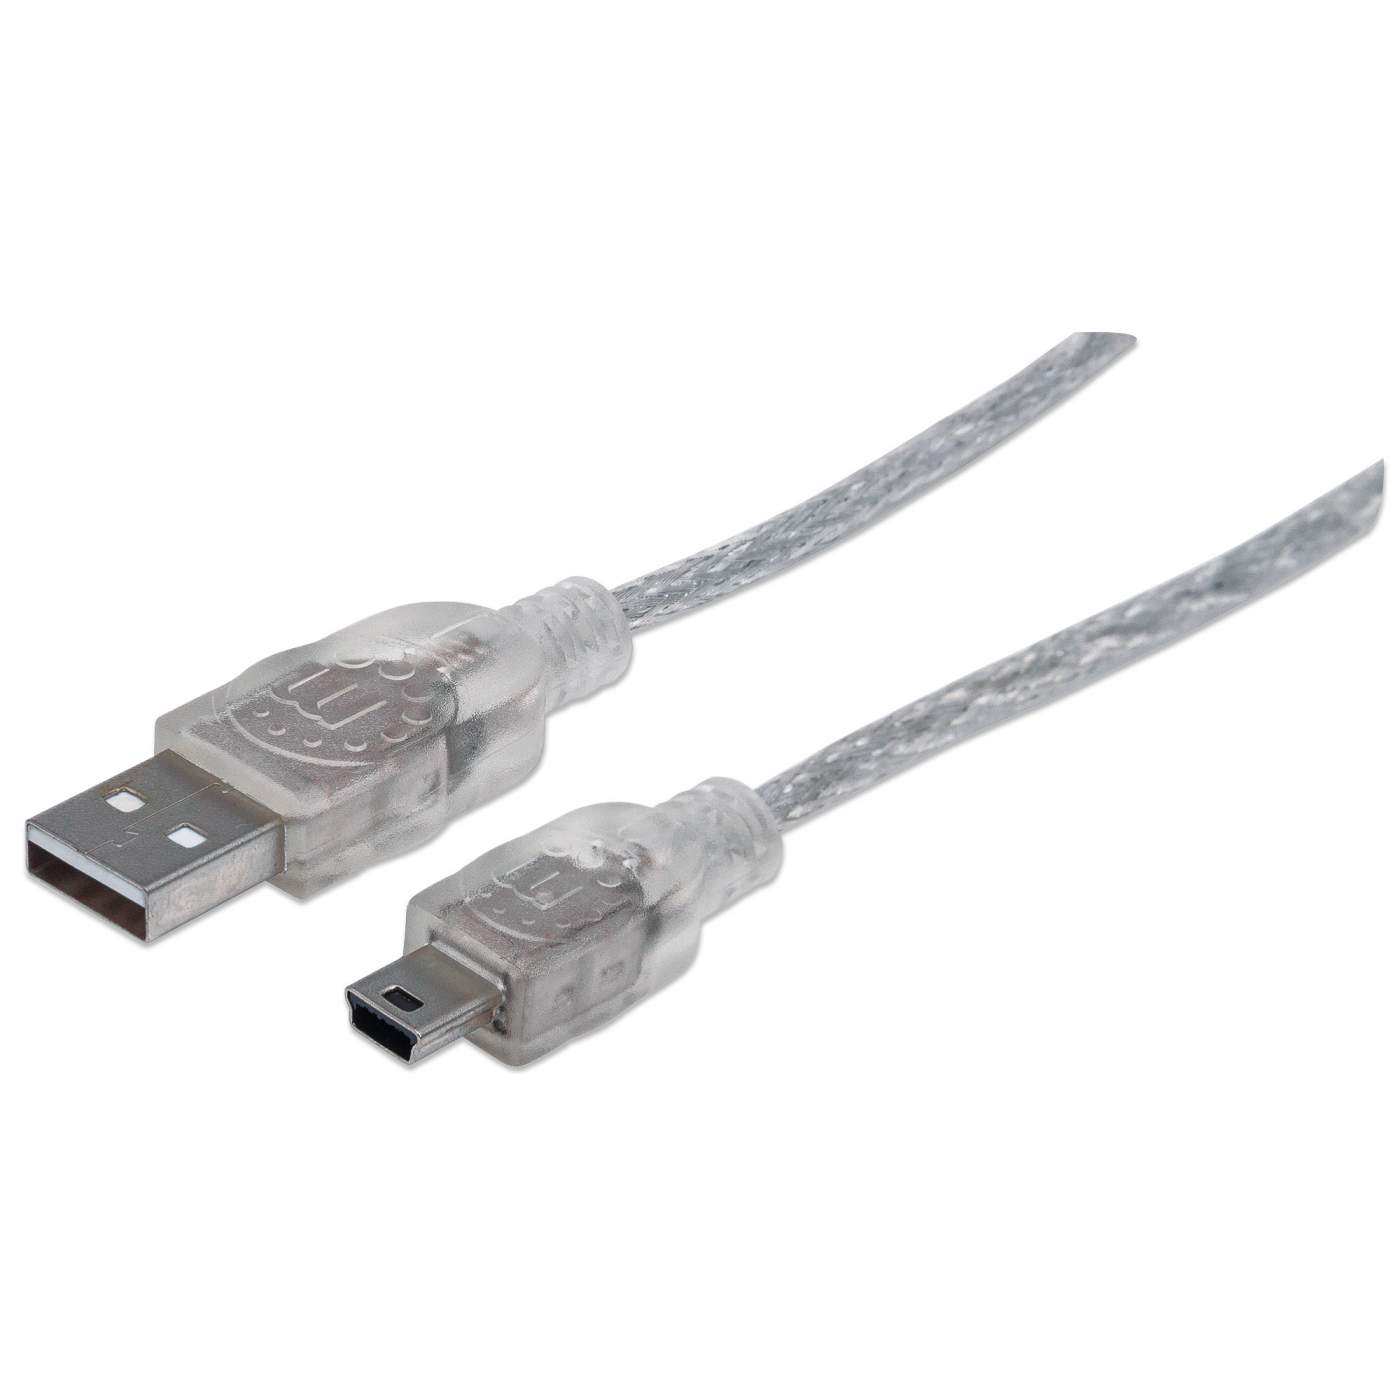 Manhattan Hi-Speed USB Mini-B Device Cable (333375)